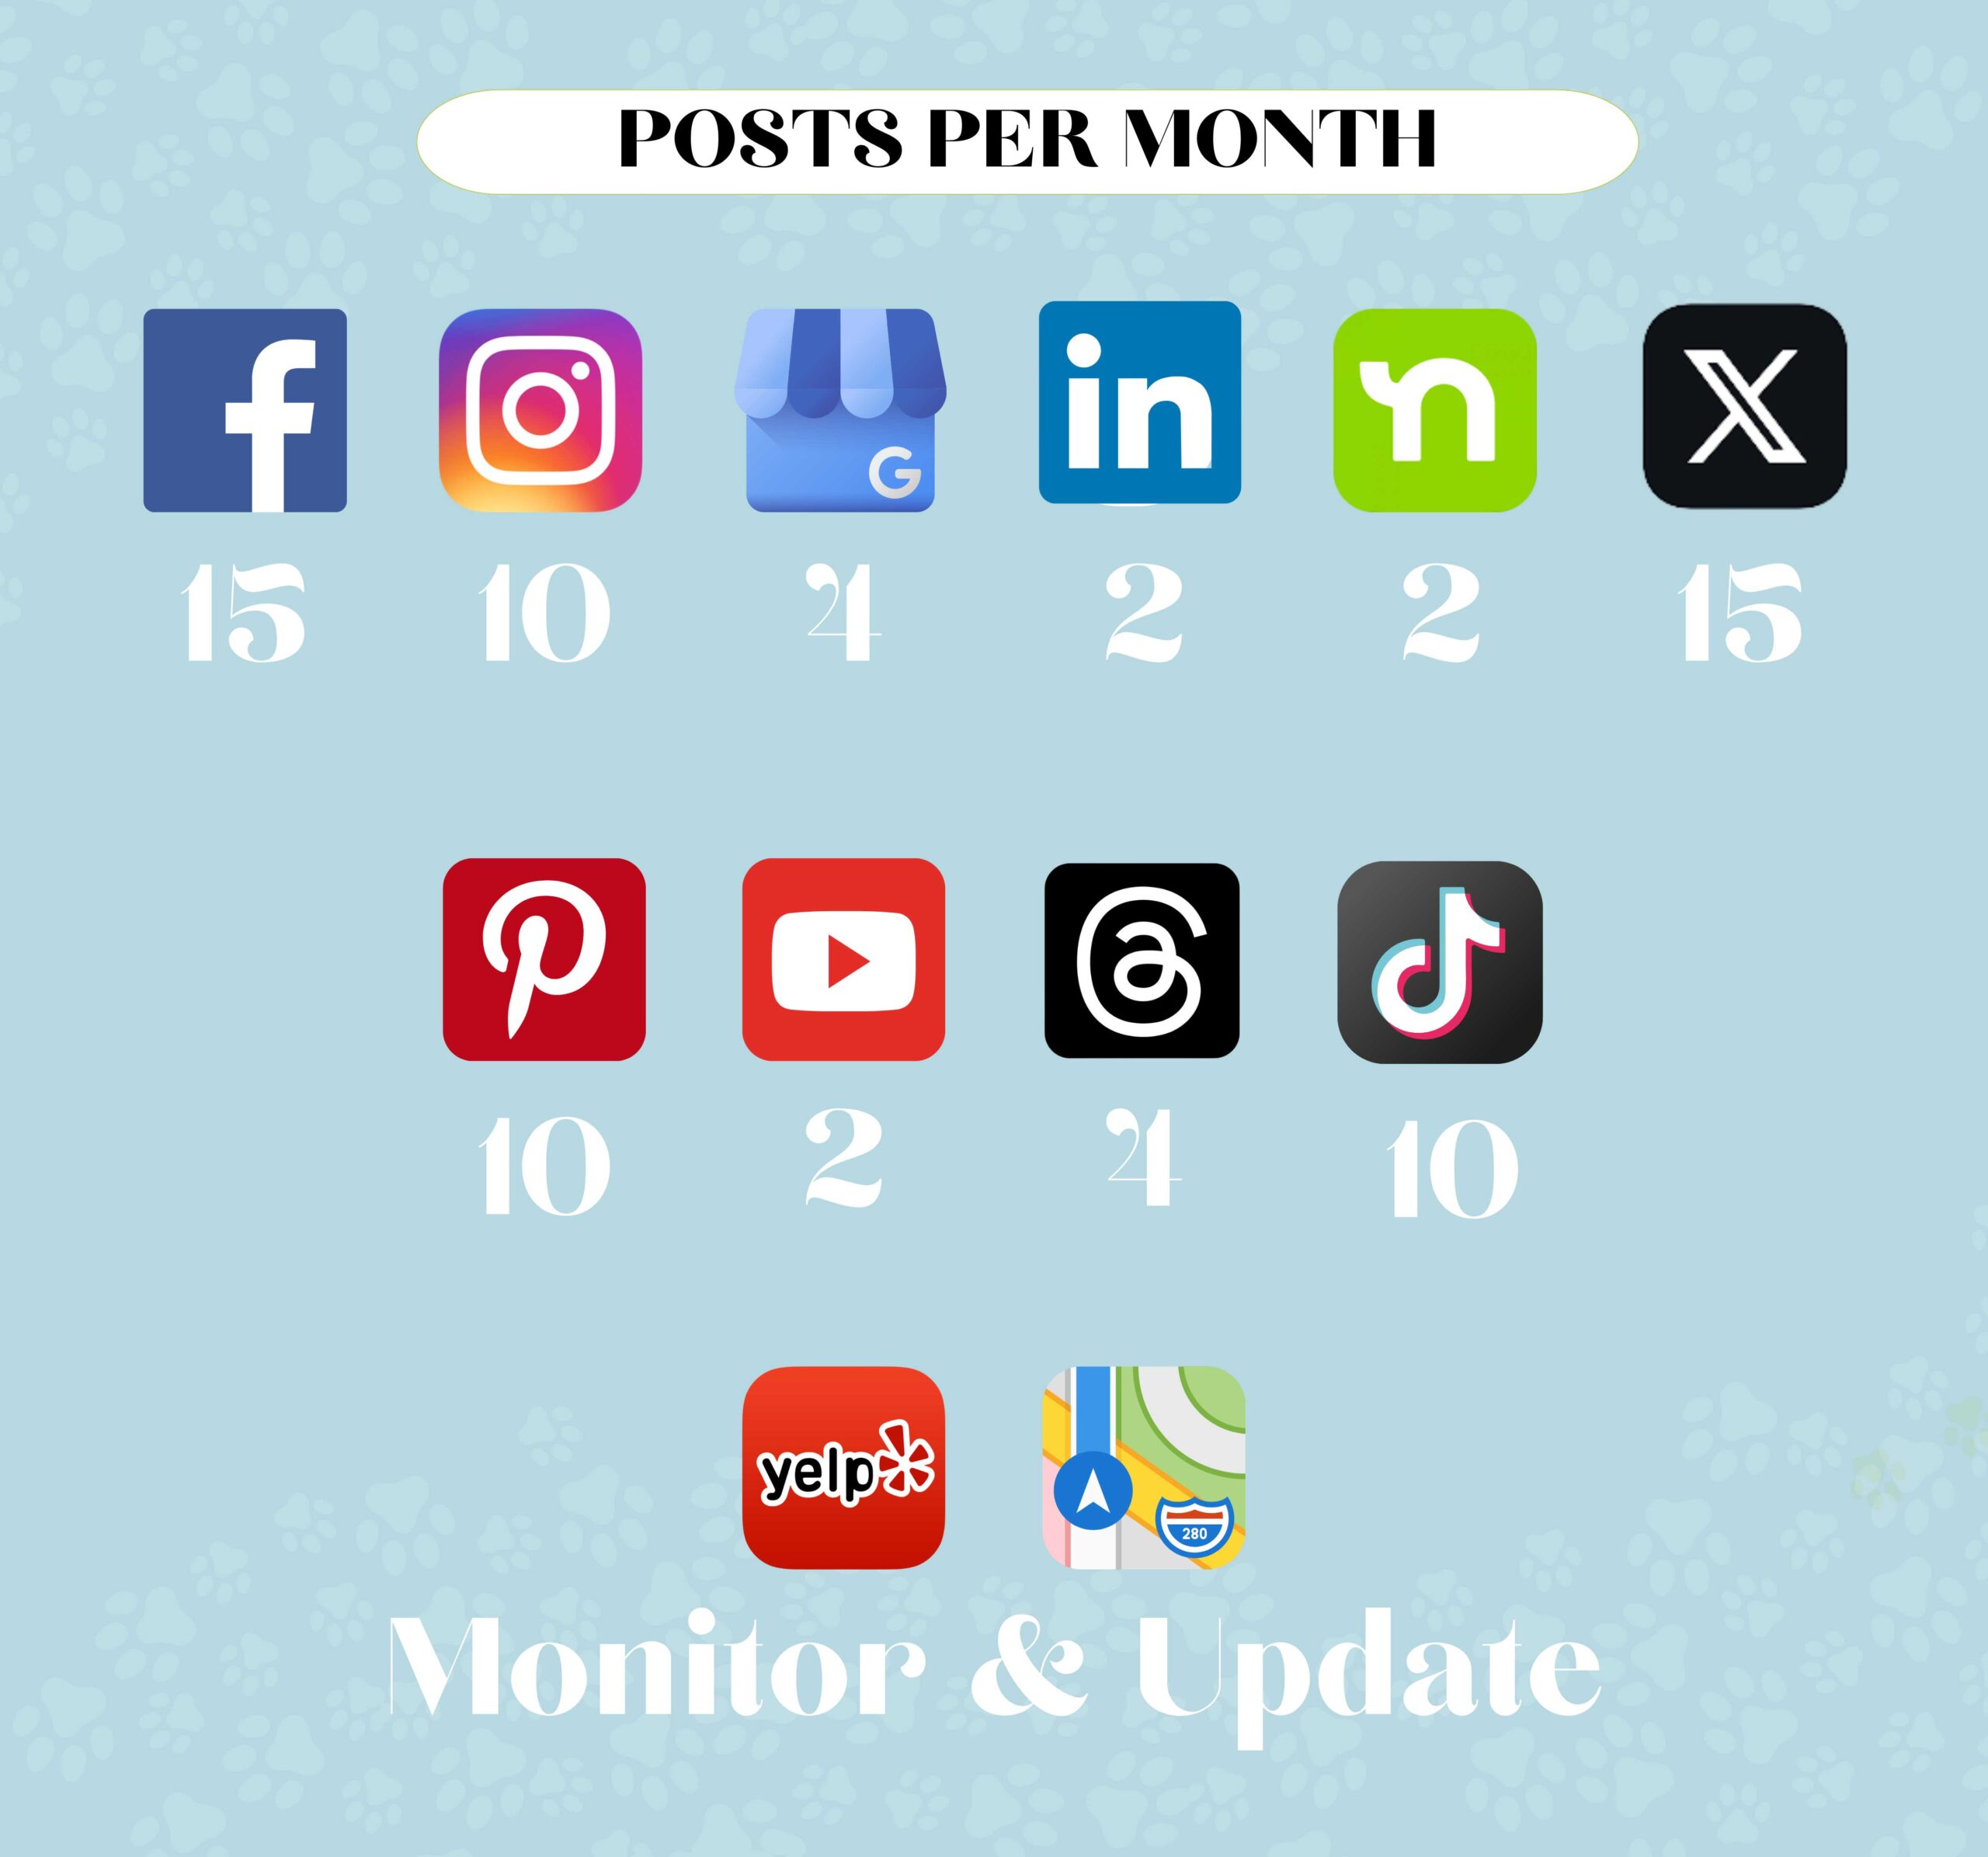 LD Website Posts Per Month - 1